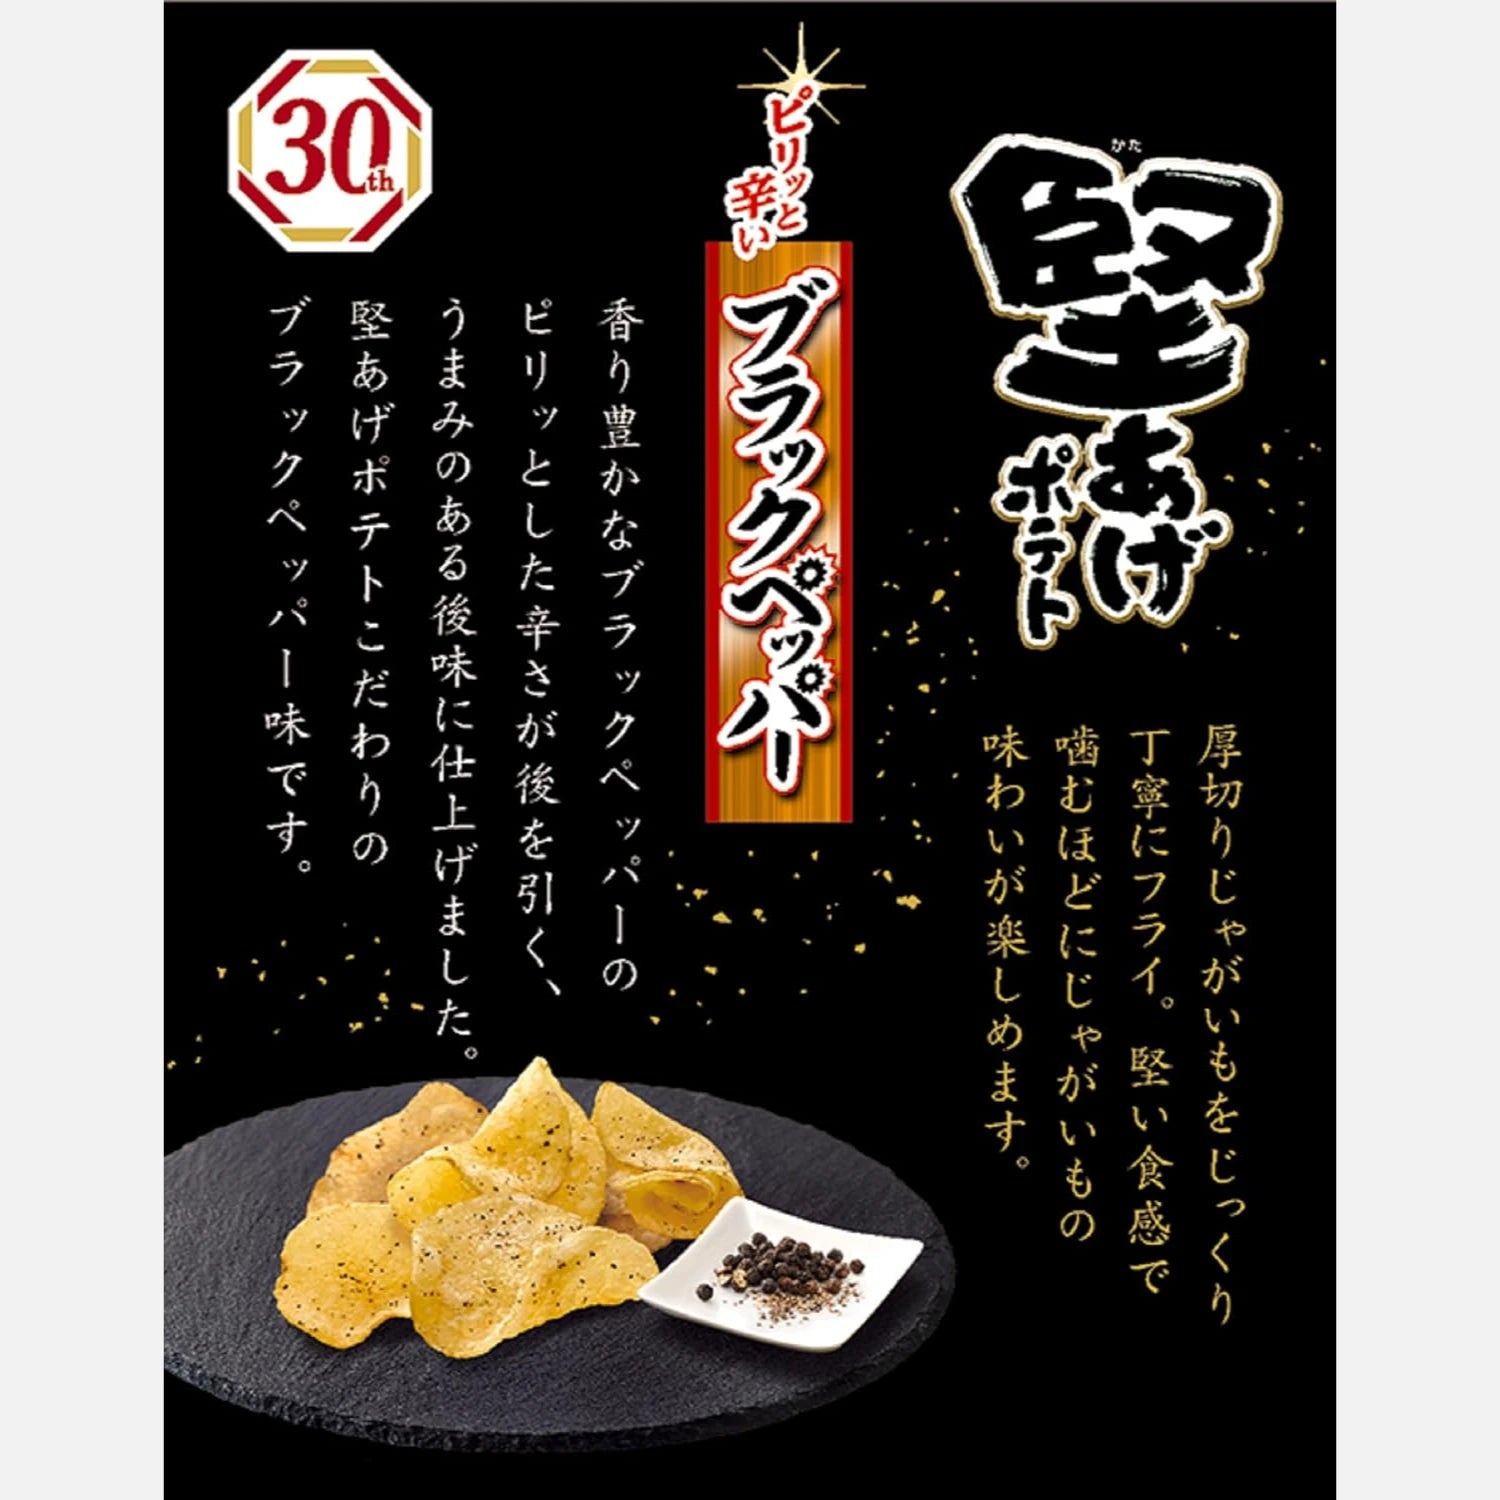 Calbee Kata Age Crunchy Potato Chips Black Pepper 65g - Buy Me Japan